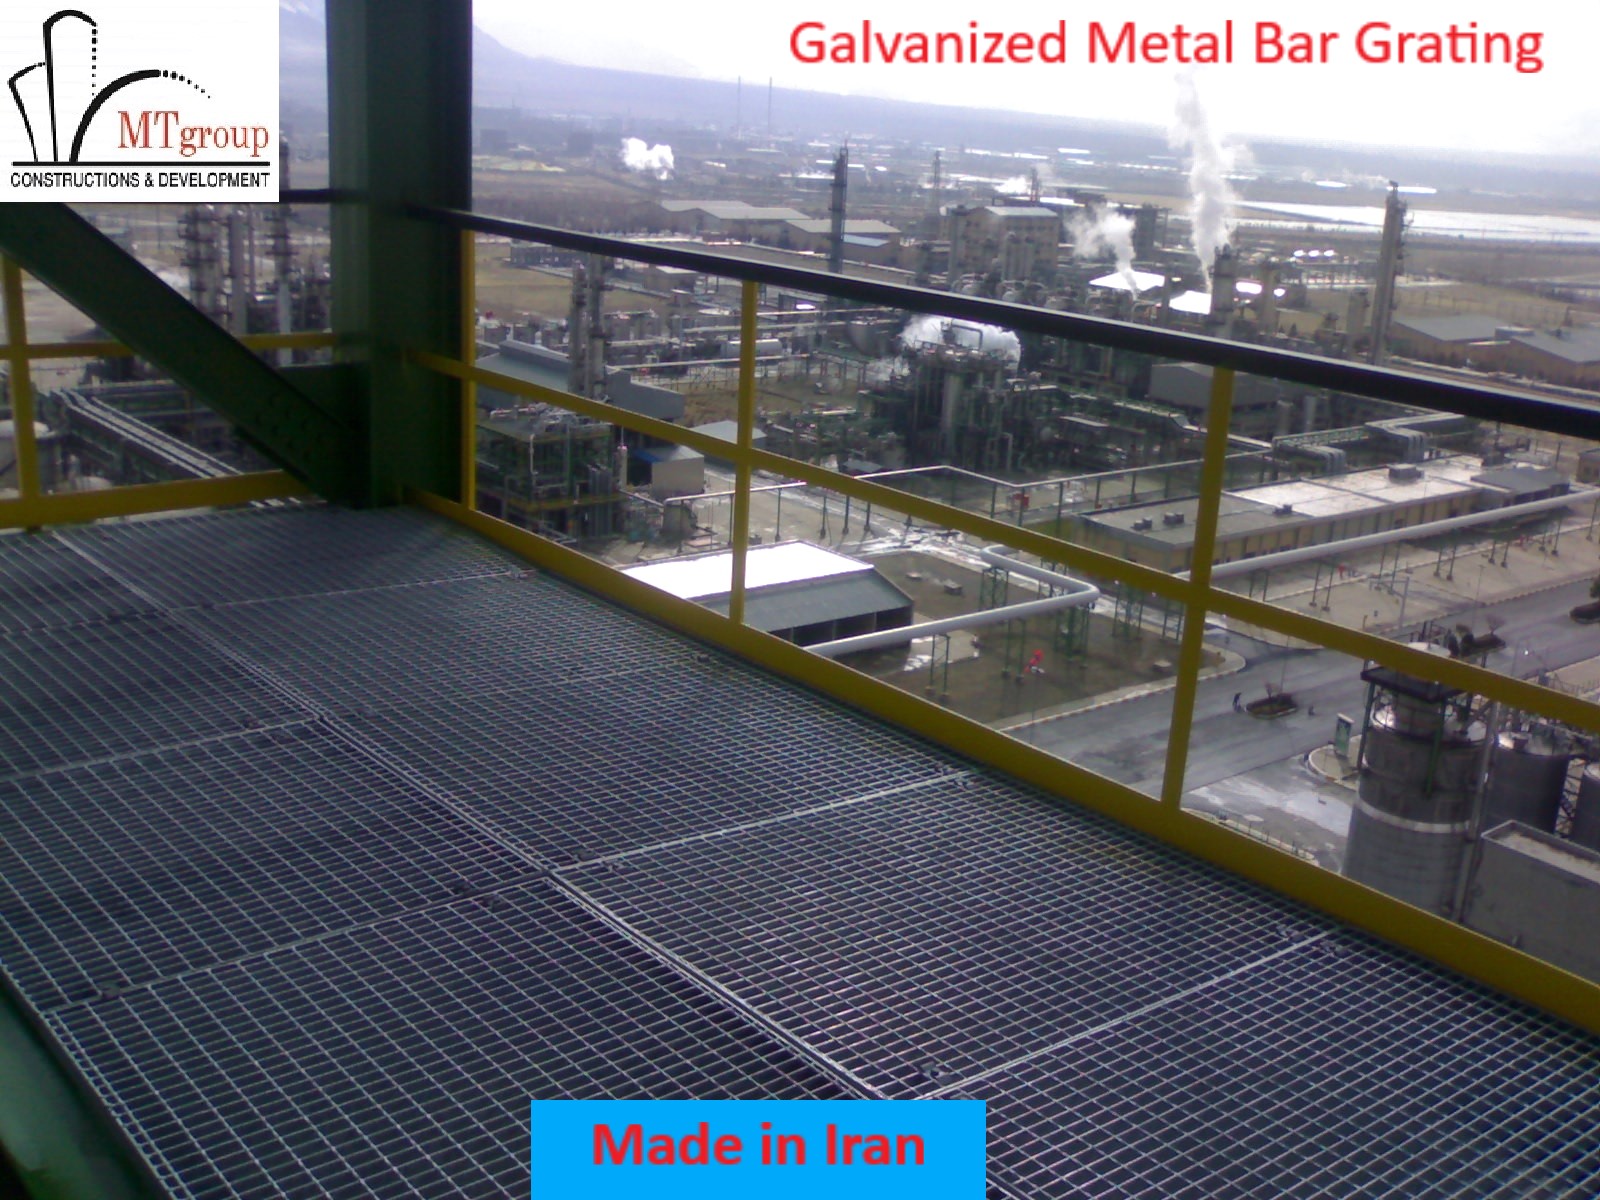 Galvanized Metal bar grating